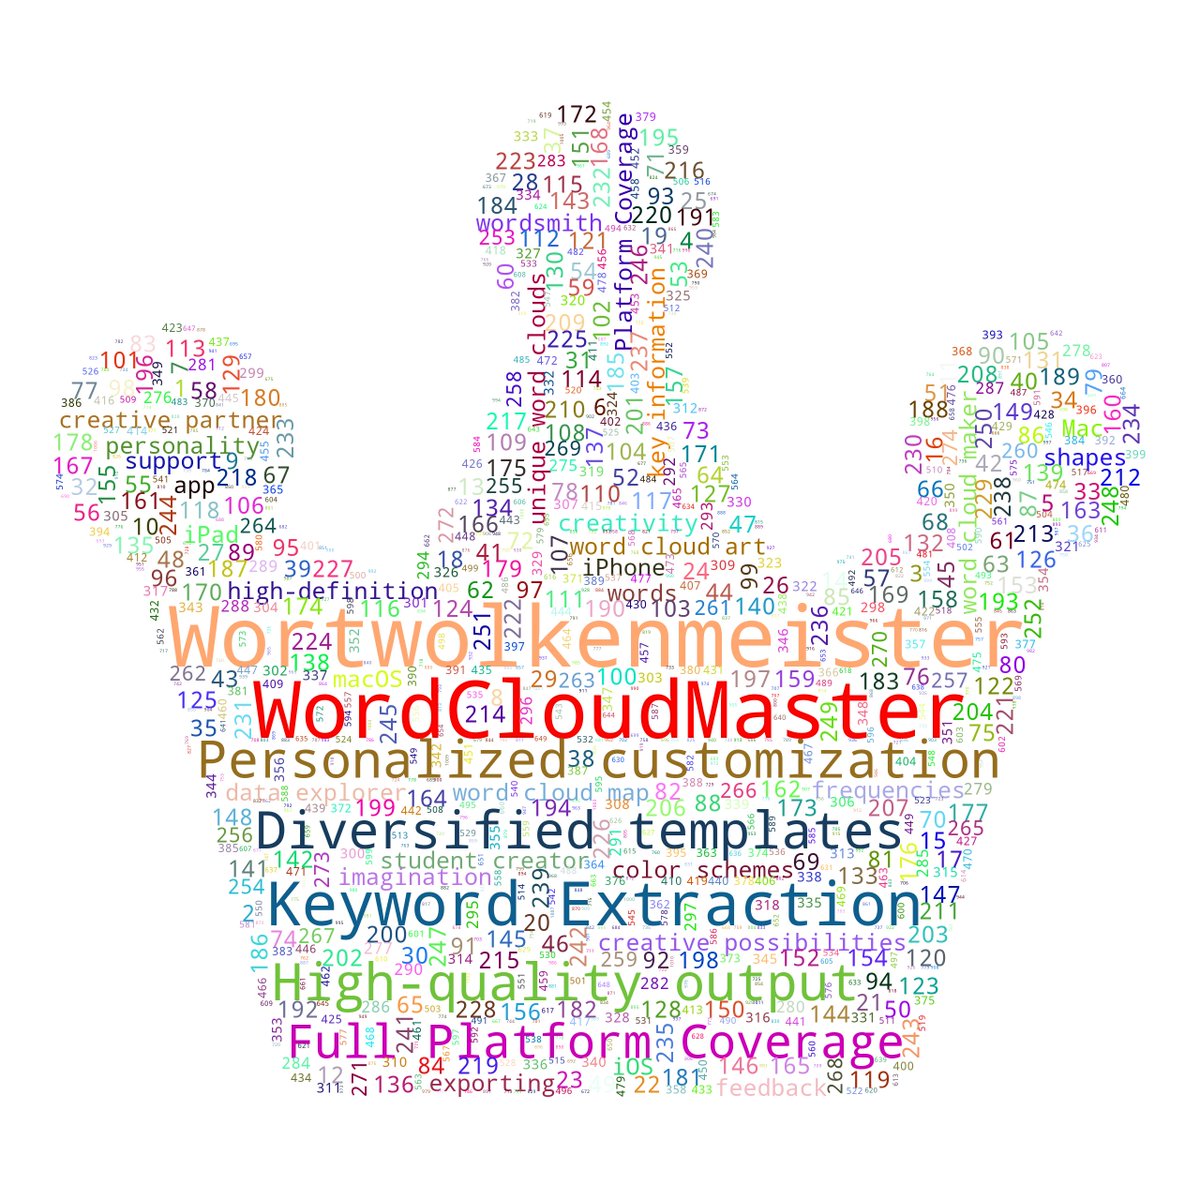 #WordCloudMaster #wordcloud #crownthree #tagcloud #詞雲圖 #Wortwolkendiagramm #词云图 #标签云 #文字云 #Wortwolkendiagramm #nube_de_palabras #Maestro_de_la_nube_de_palabras #iphone #mac #Apple #iPad #ワードクラウドマスター #ワードクラウドマップ

👉 apps.apple.com/app/wordcloudm…